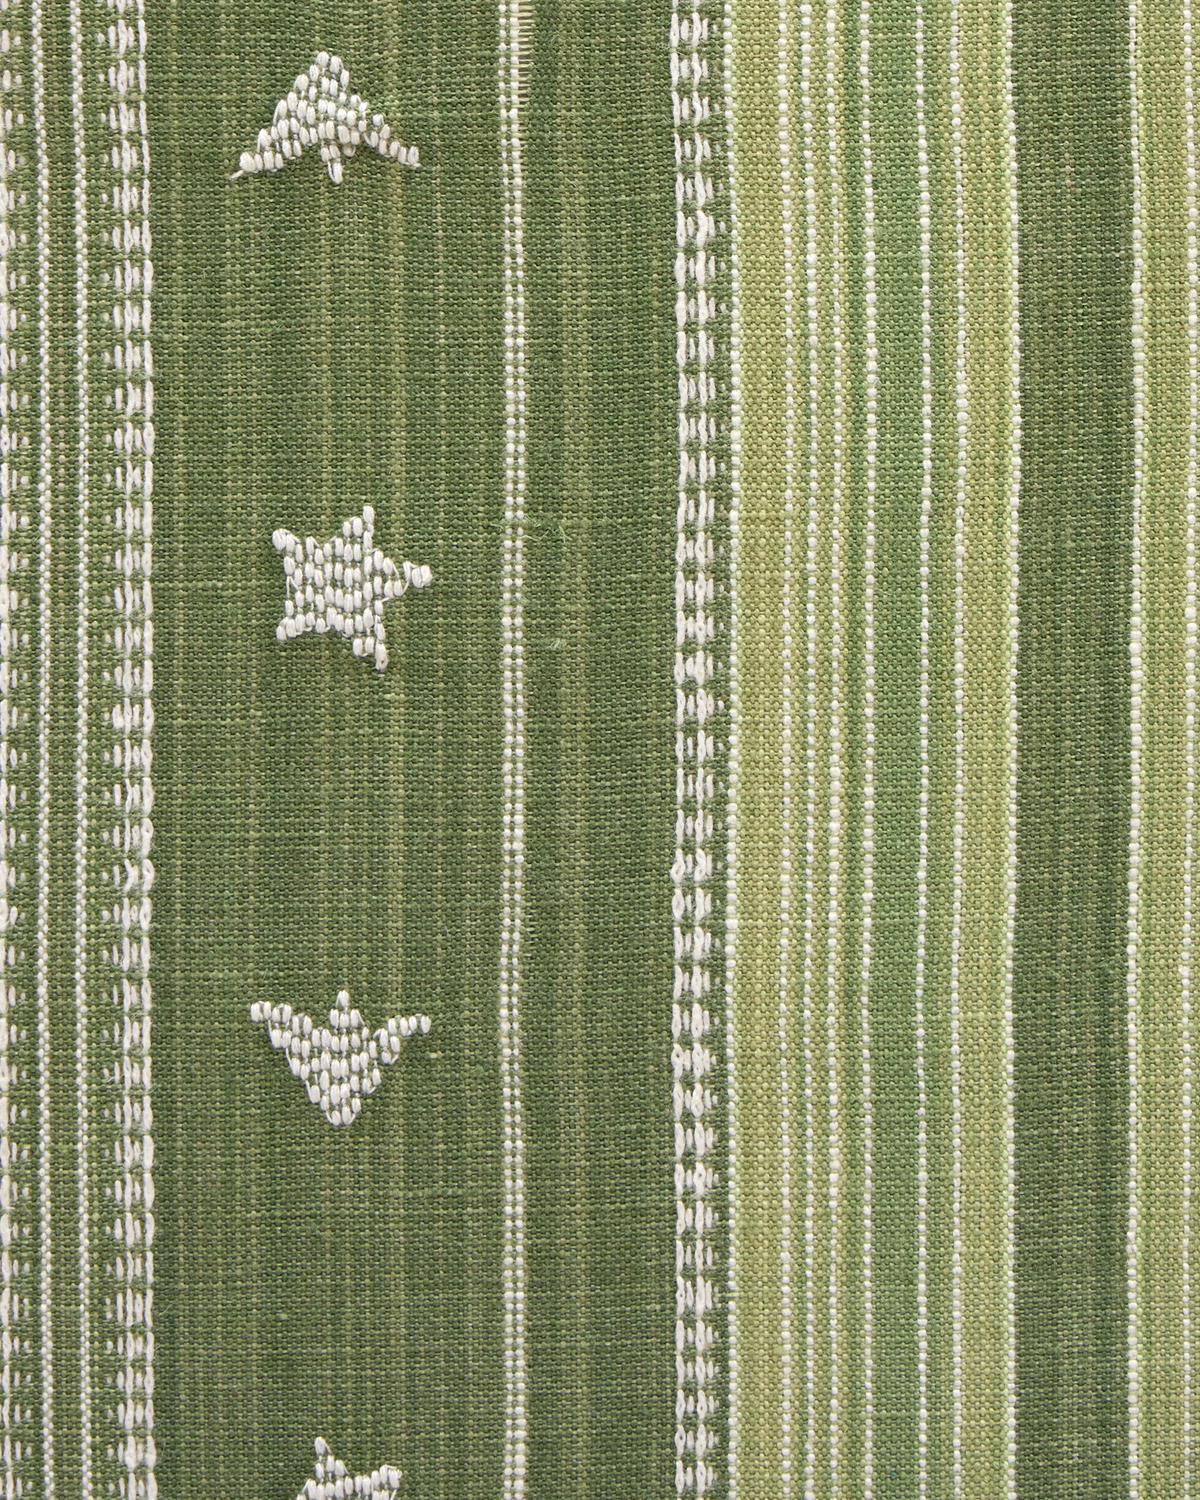 Budding Stripe Fabric in Grass